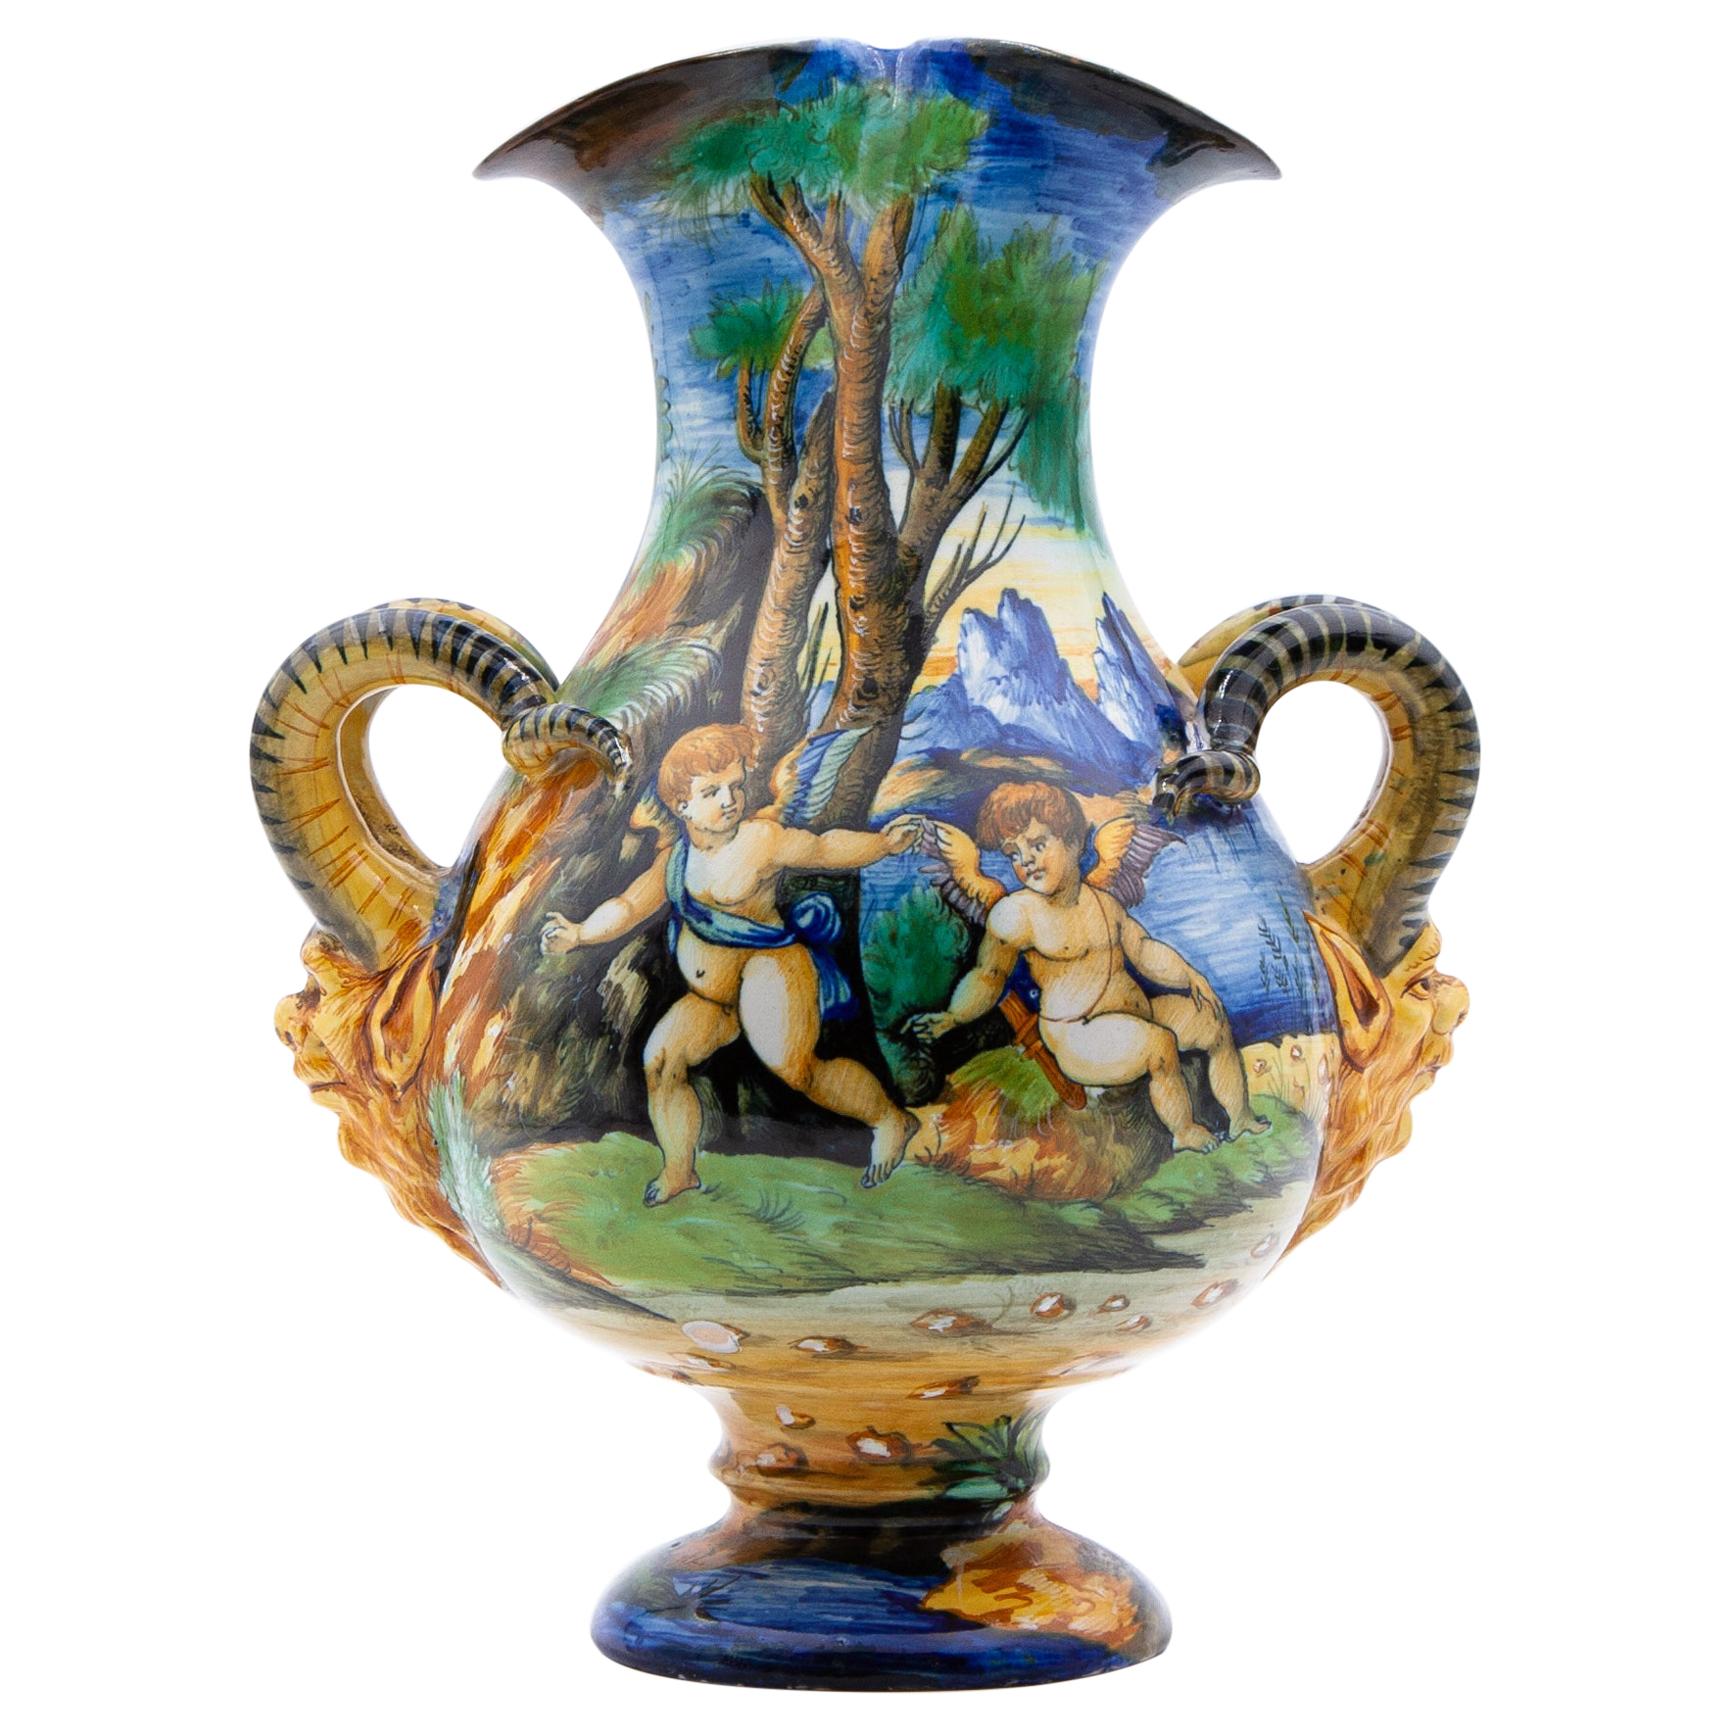 Cantagalli Italian Renaissance Revival Maiolica Vase, circa 1890